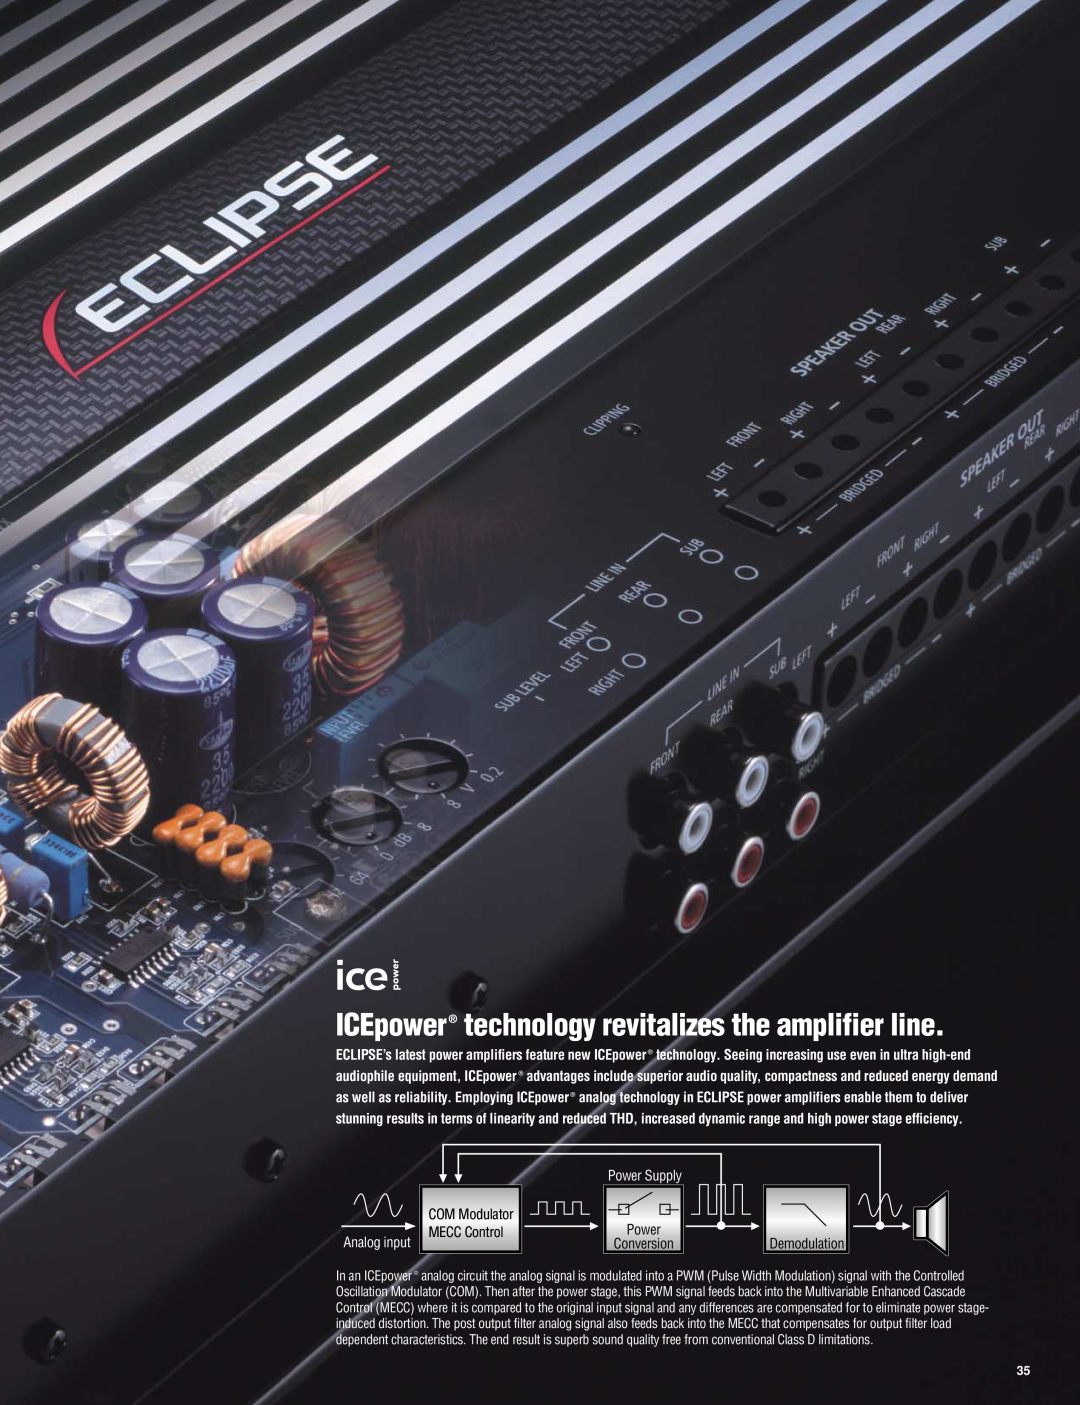 Eclipse - Fujitsu Ten AV8533 ICEpower technology revitalizes the amplifier line, Analog input, COM Modulator, MECC Control 